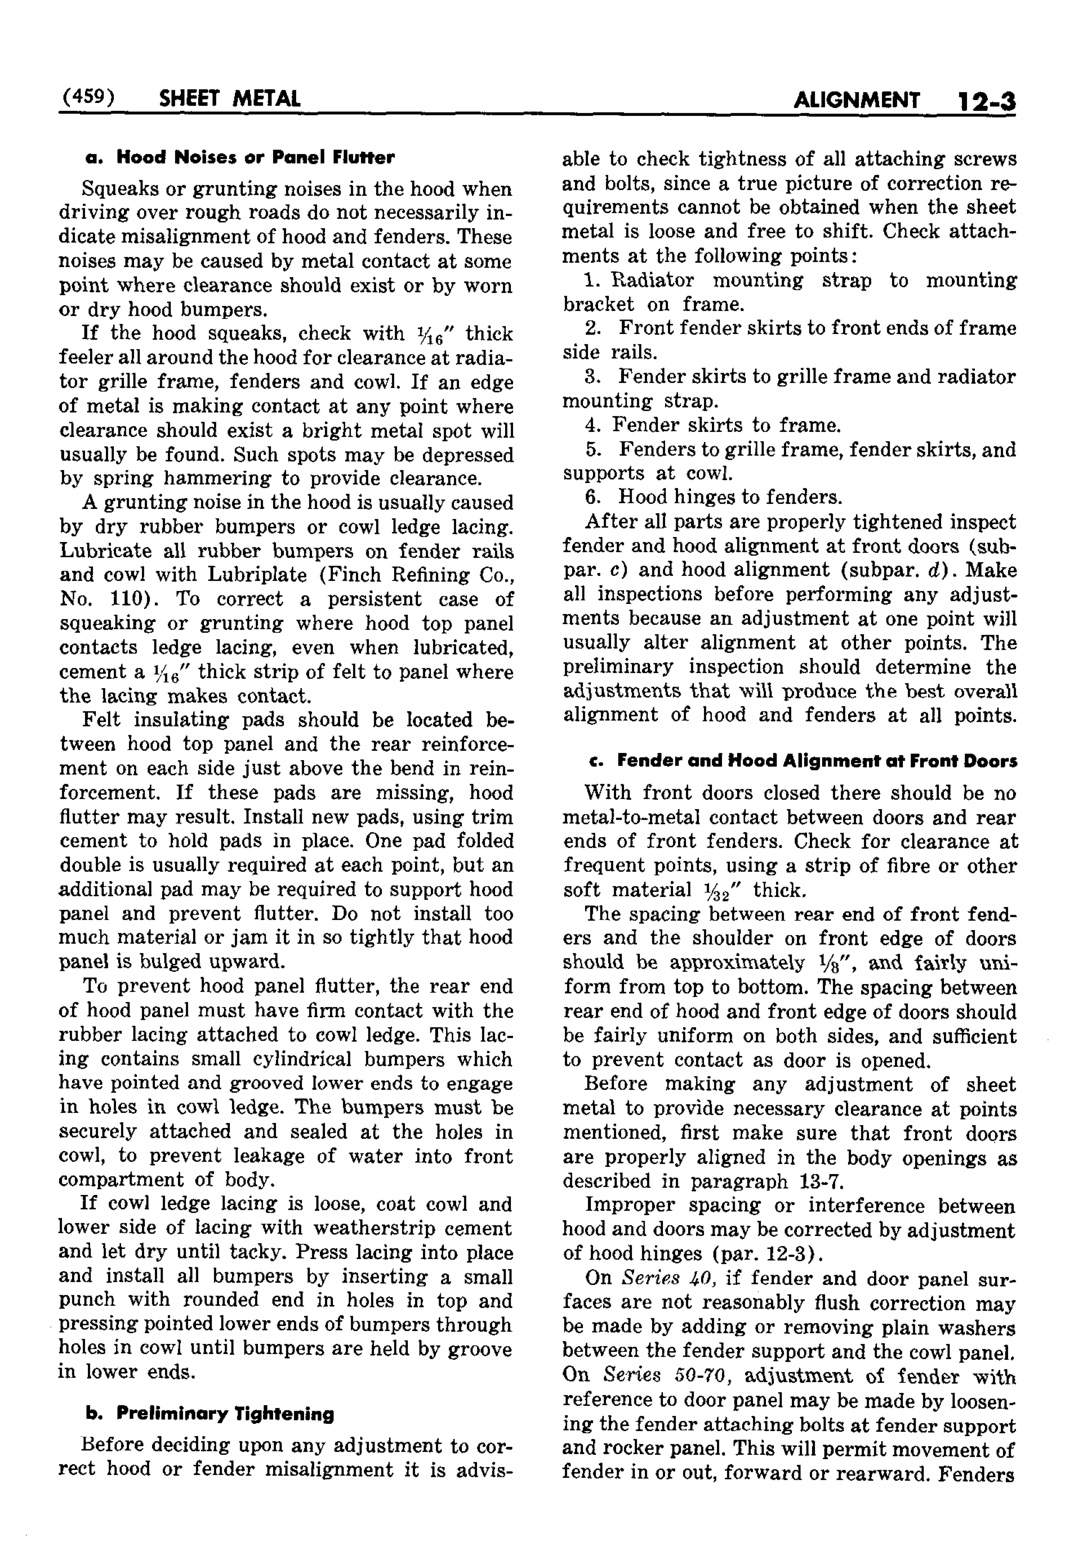 n_13 1952 Buick Shop Manual - Sheet Metal-003-003.jpg